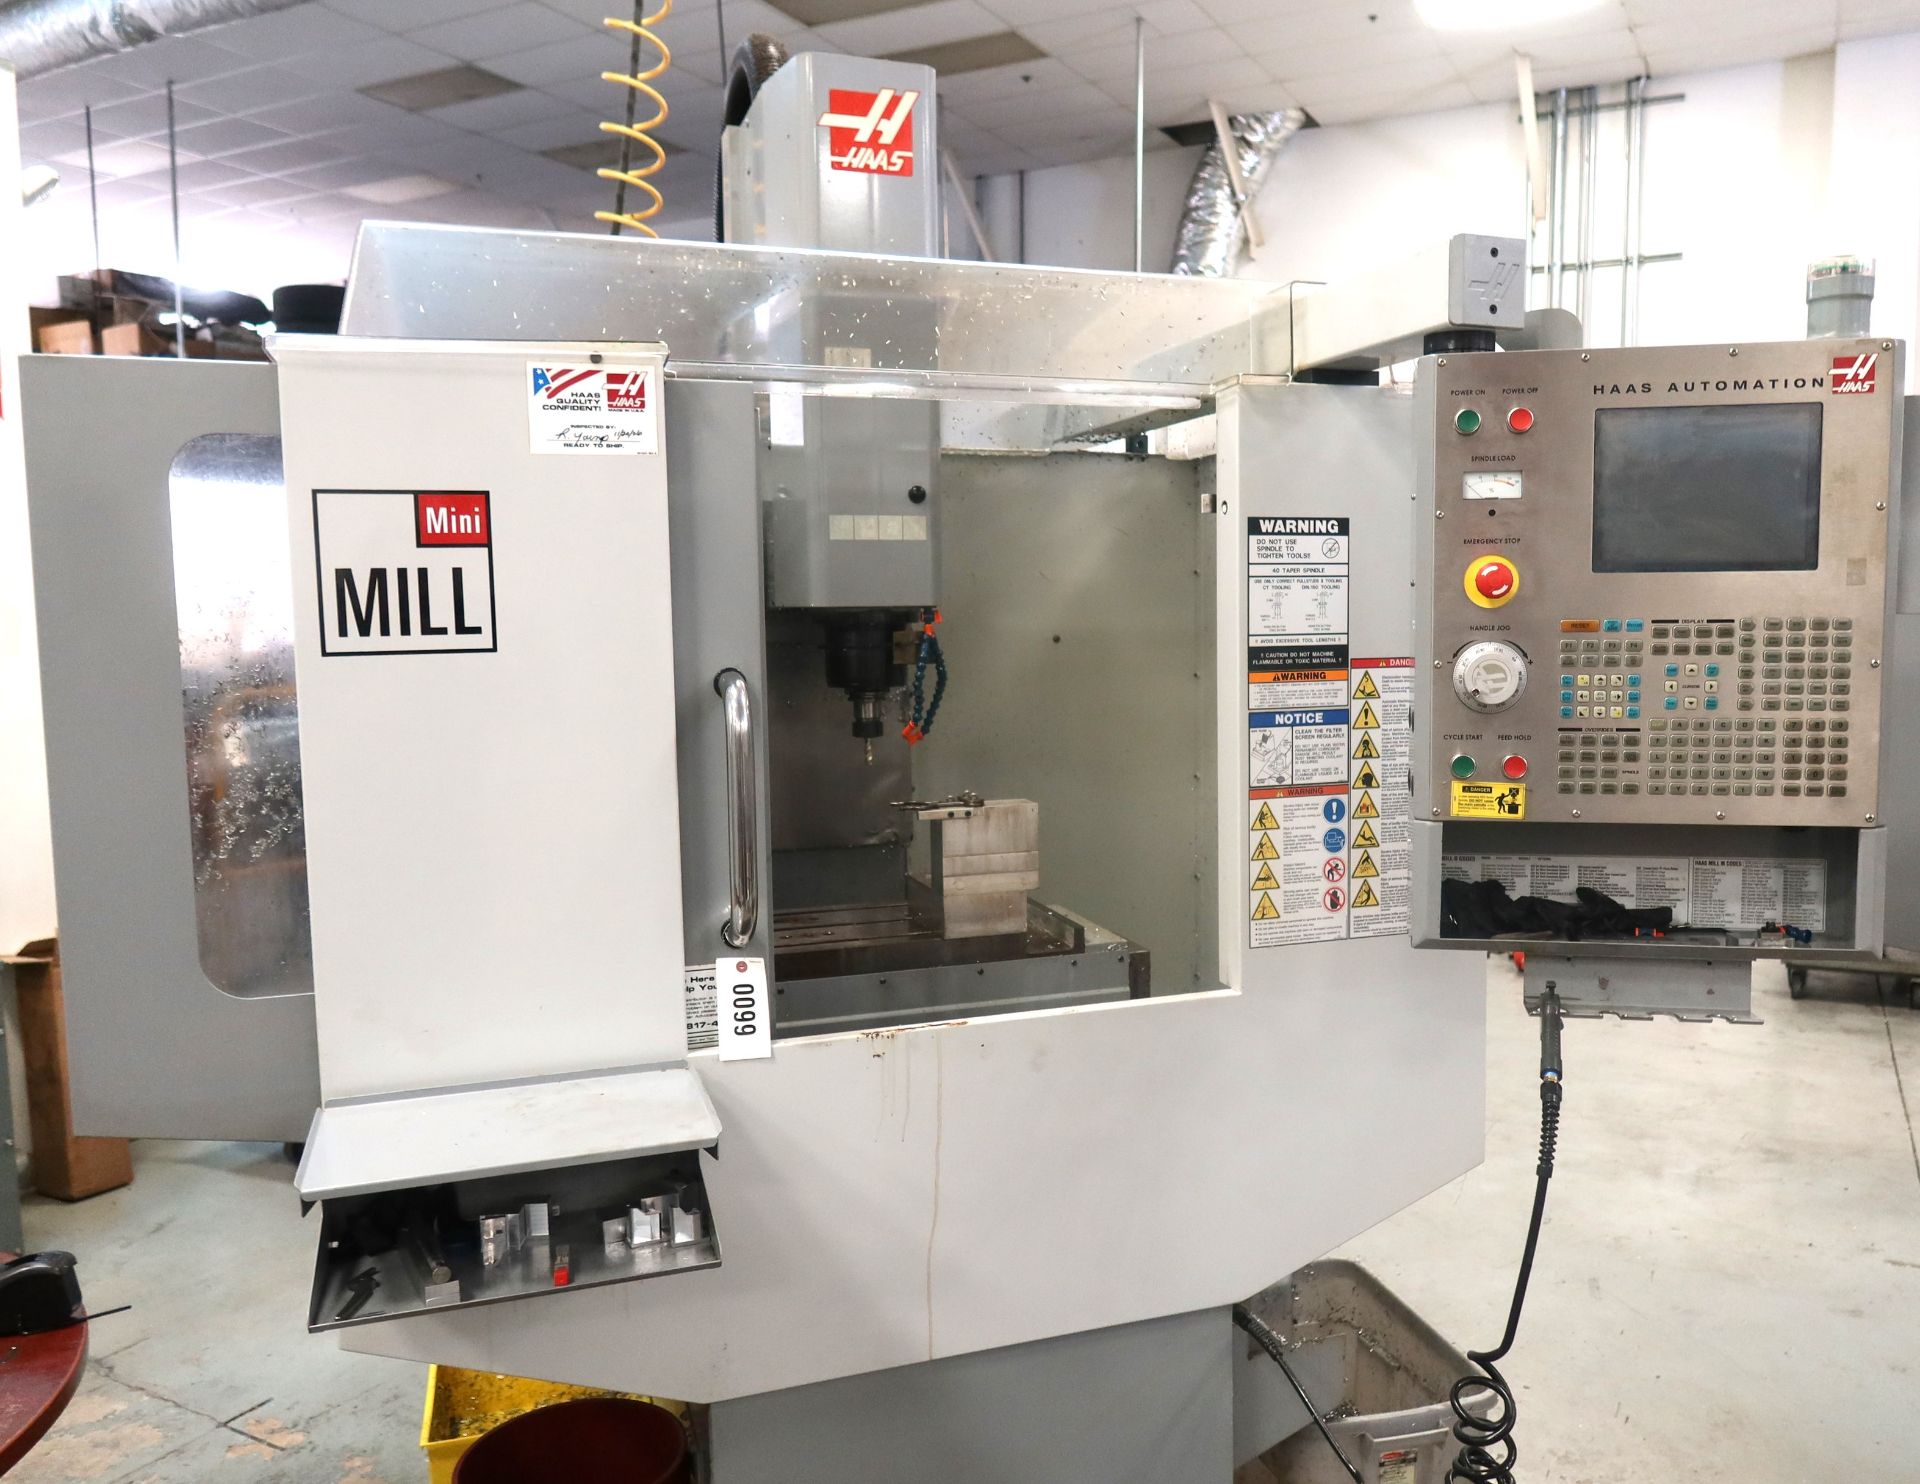 2006 Haas Mini Mill CNC 4-Axis Vertical Machining Center, SN 1053875